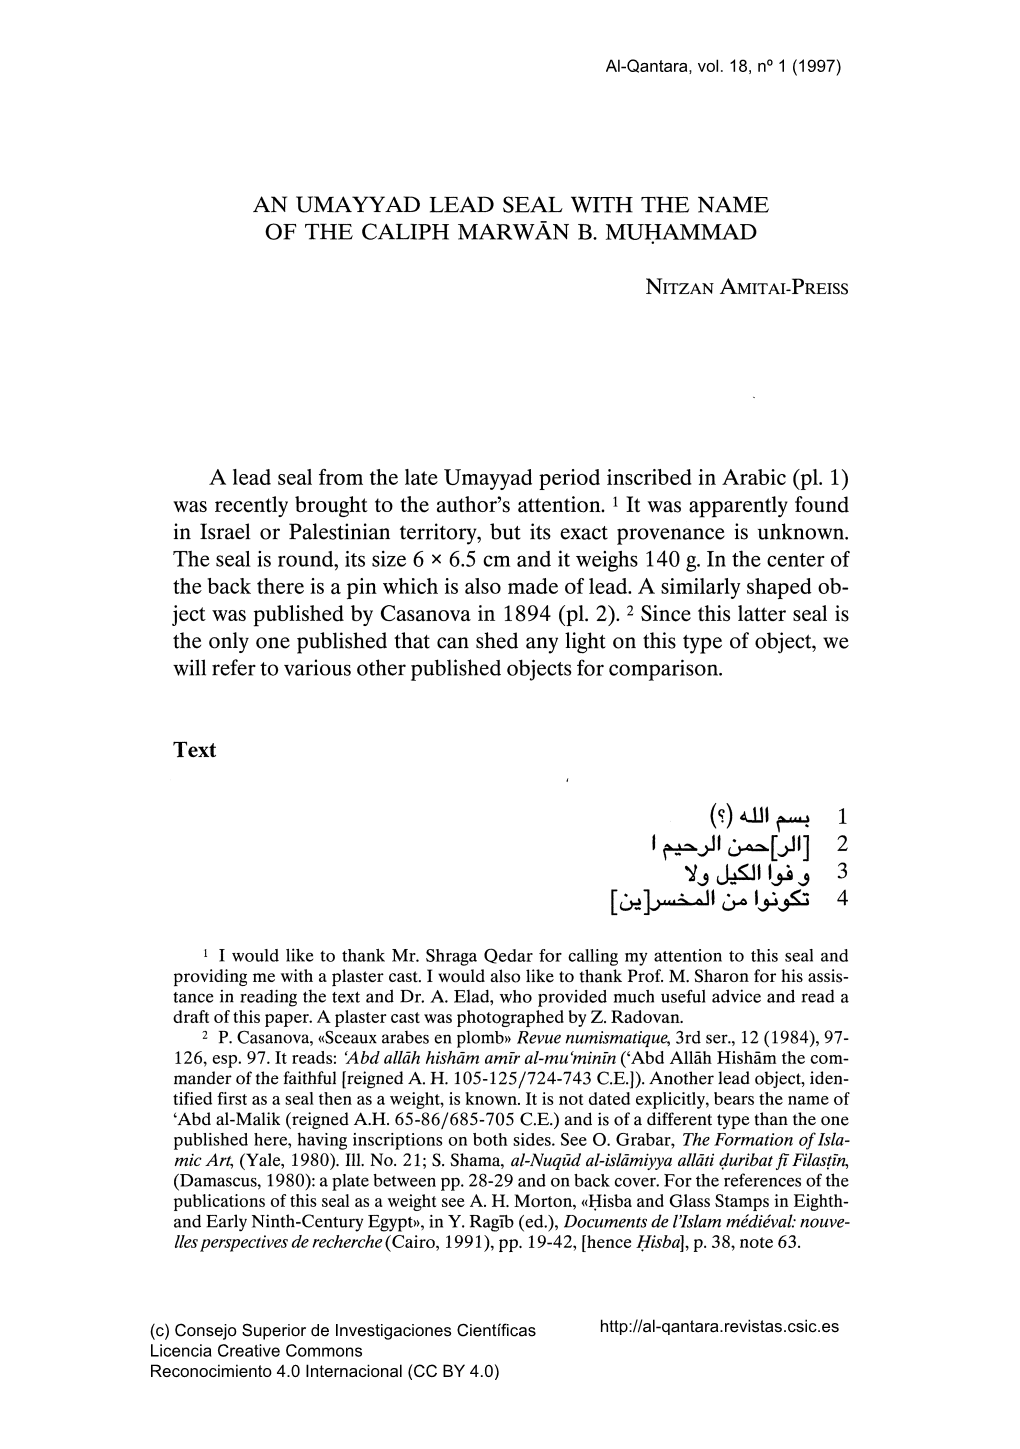 Nitzan Amitai-An Umayyad Lead Seal with the Name of the Caliph Marwān